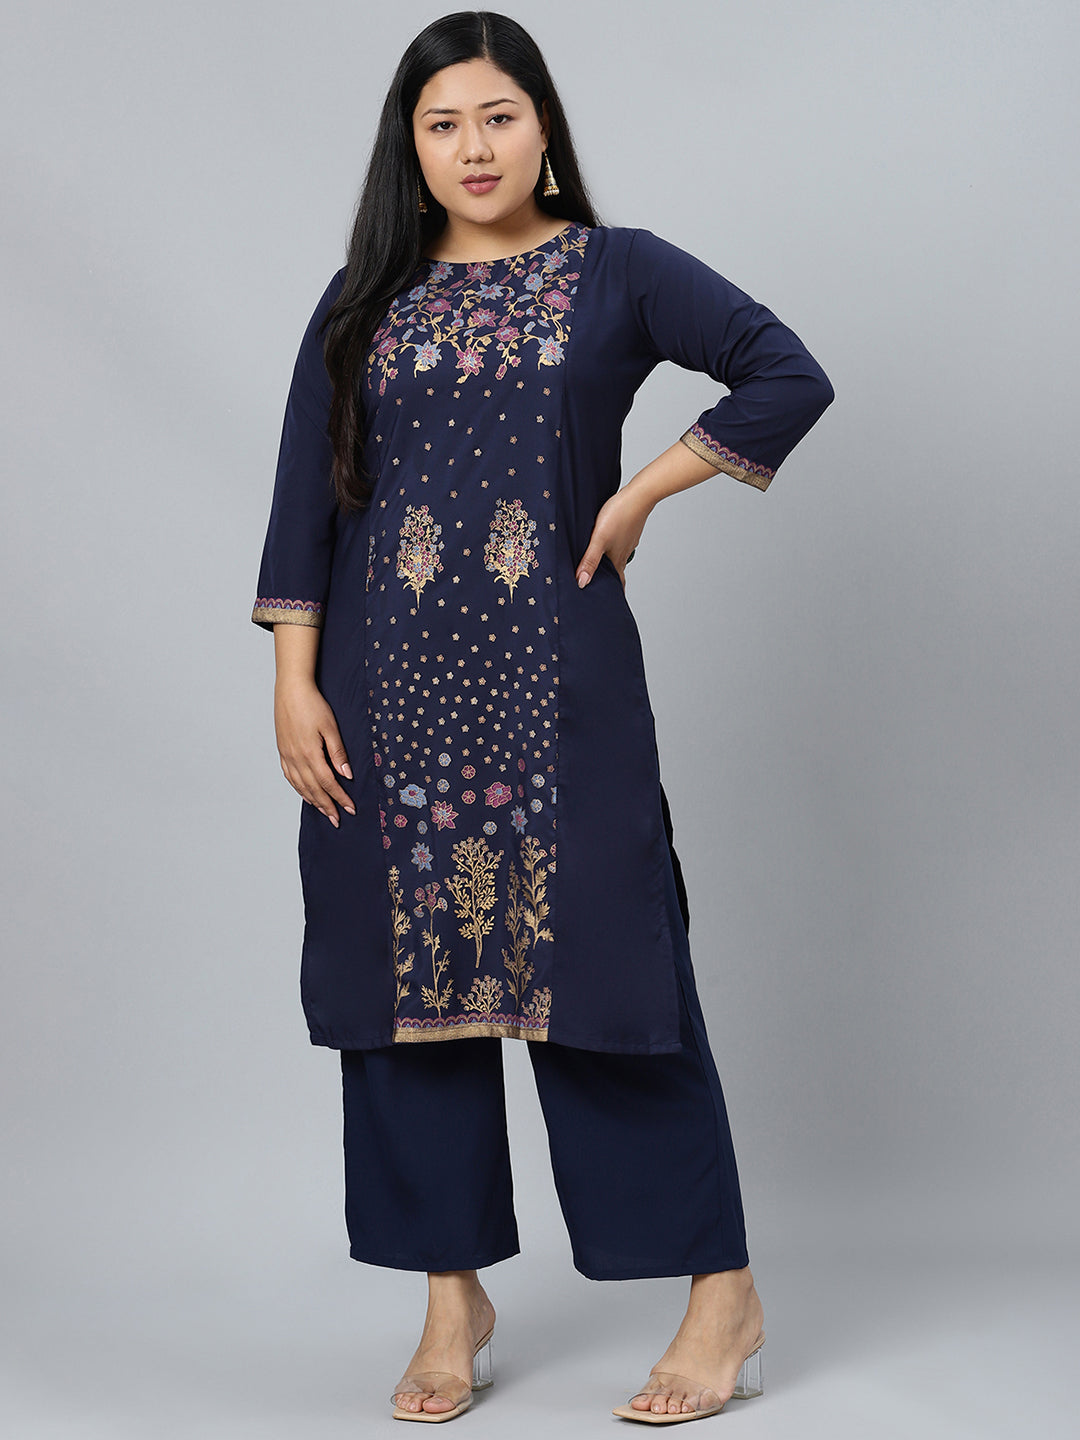 Blue kurti, red pant and dupatta with prints - Kurti Fashion